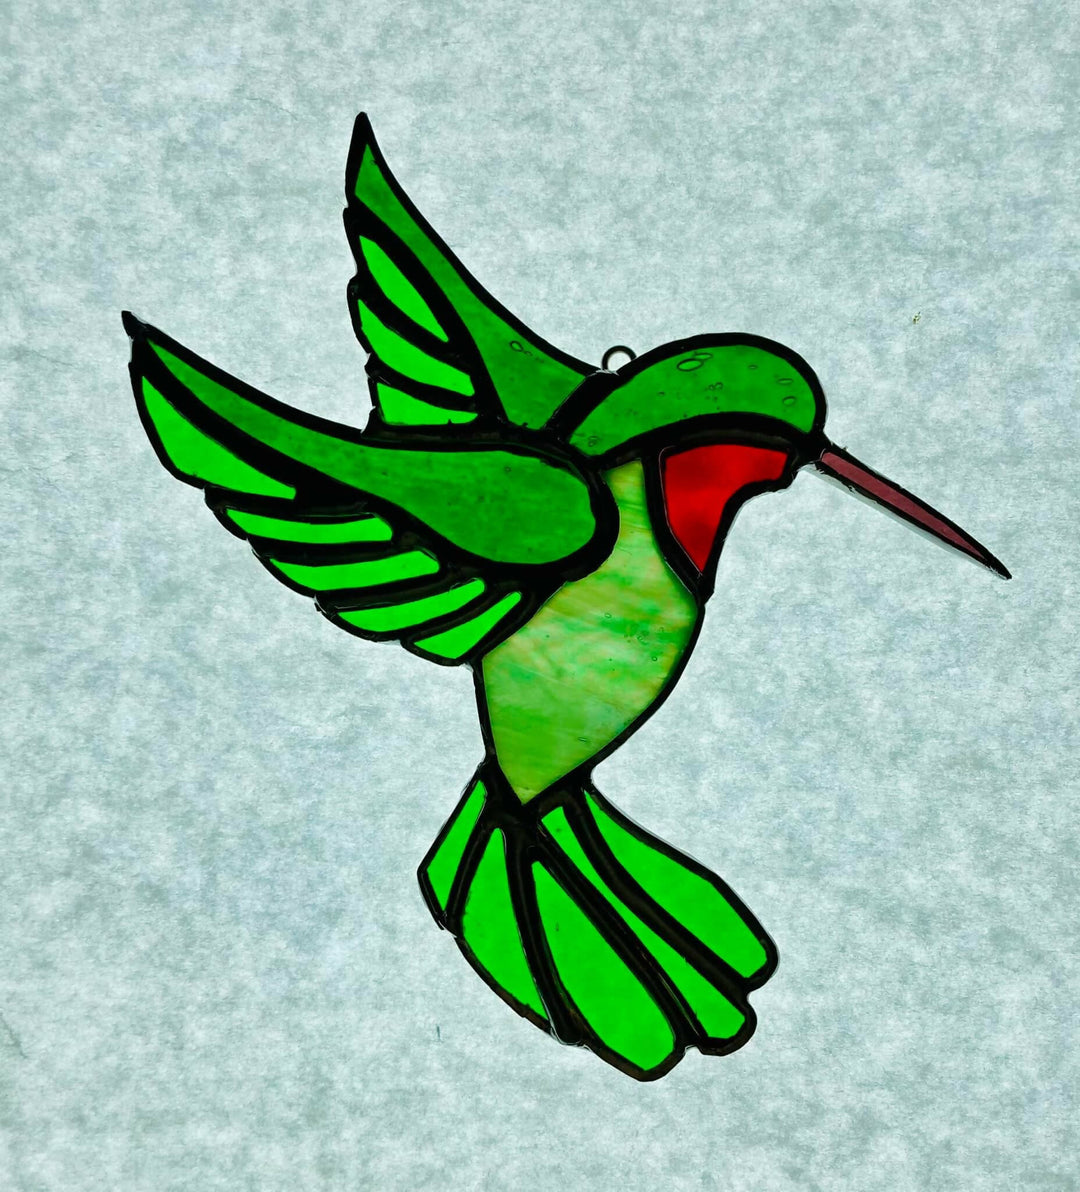 Hummingbird Suncatcher